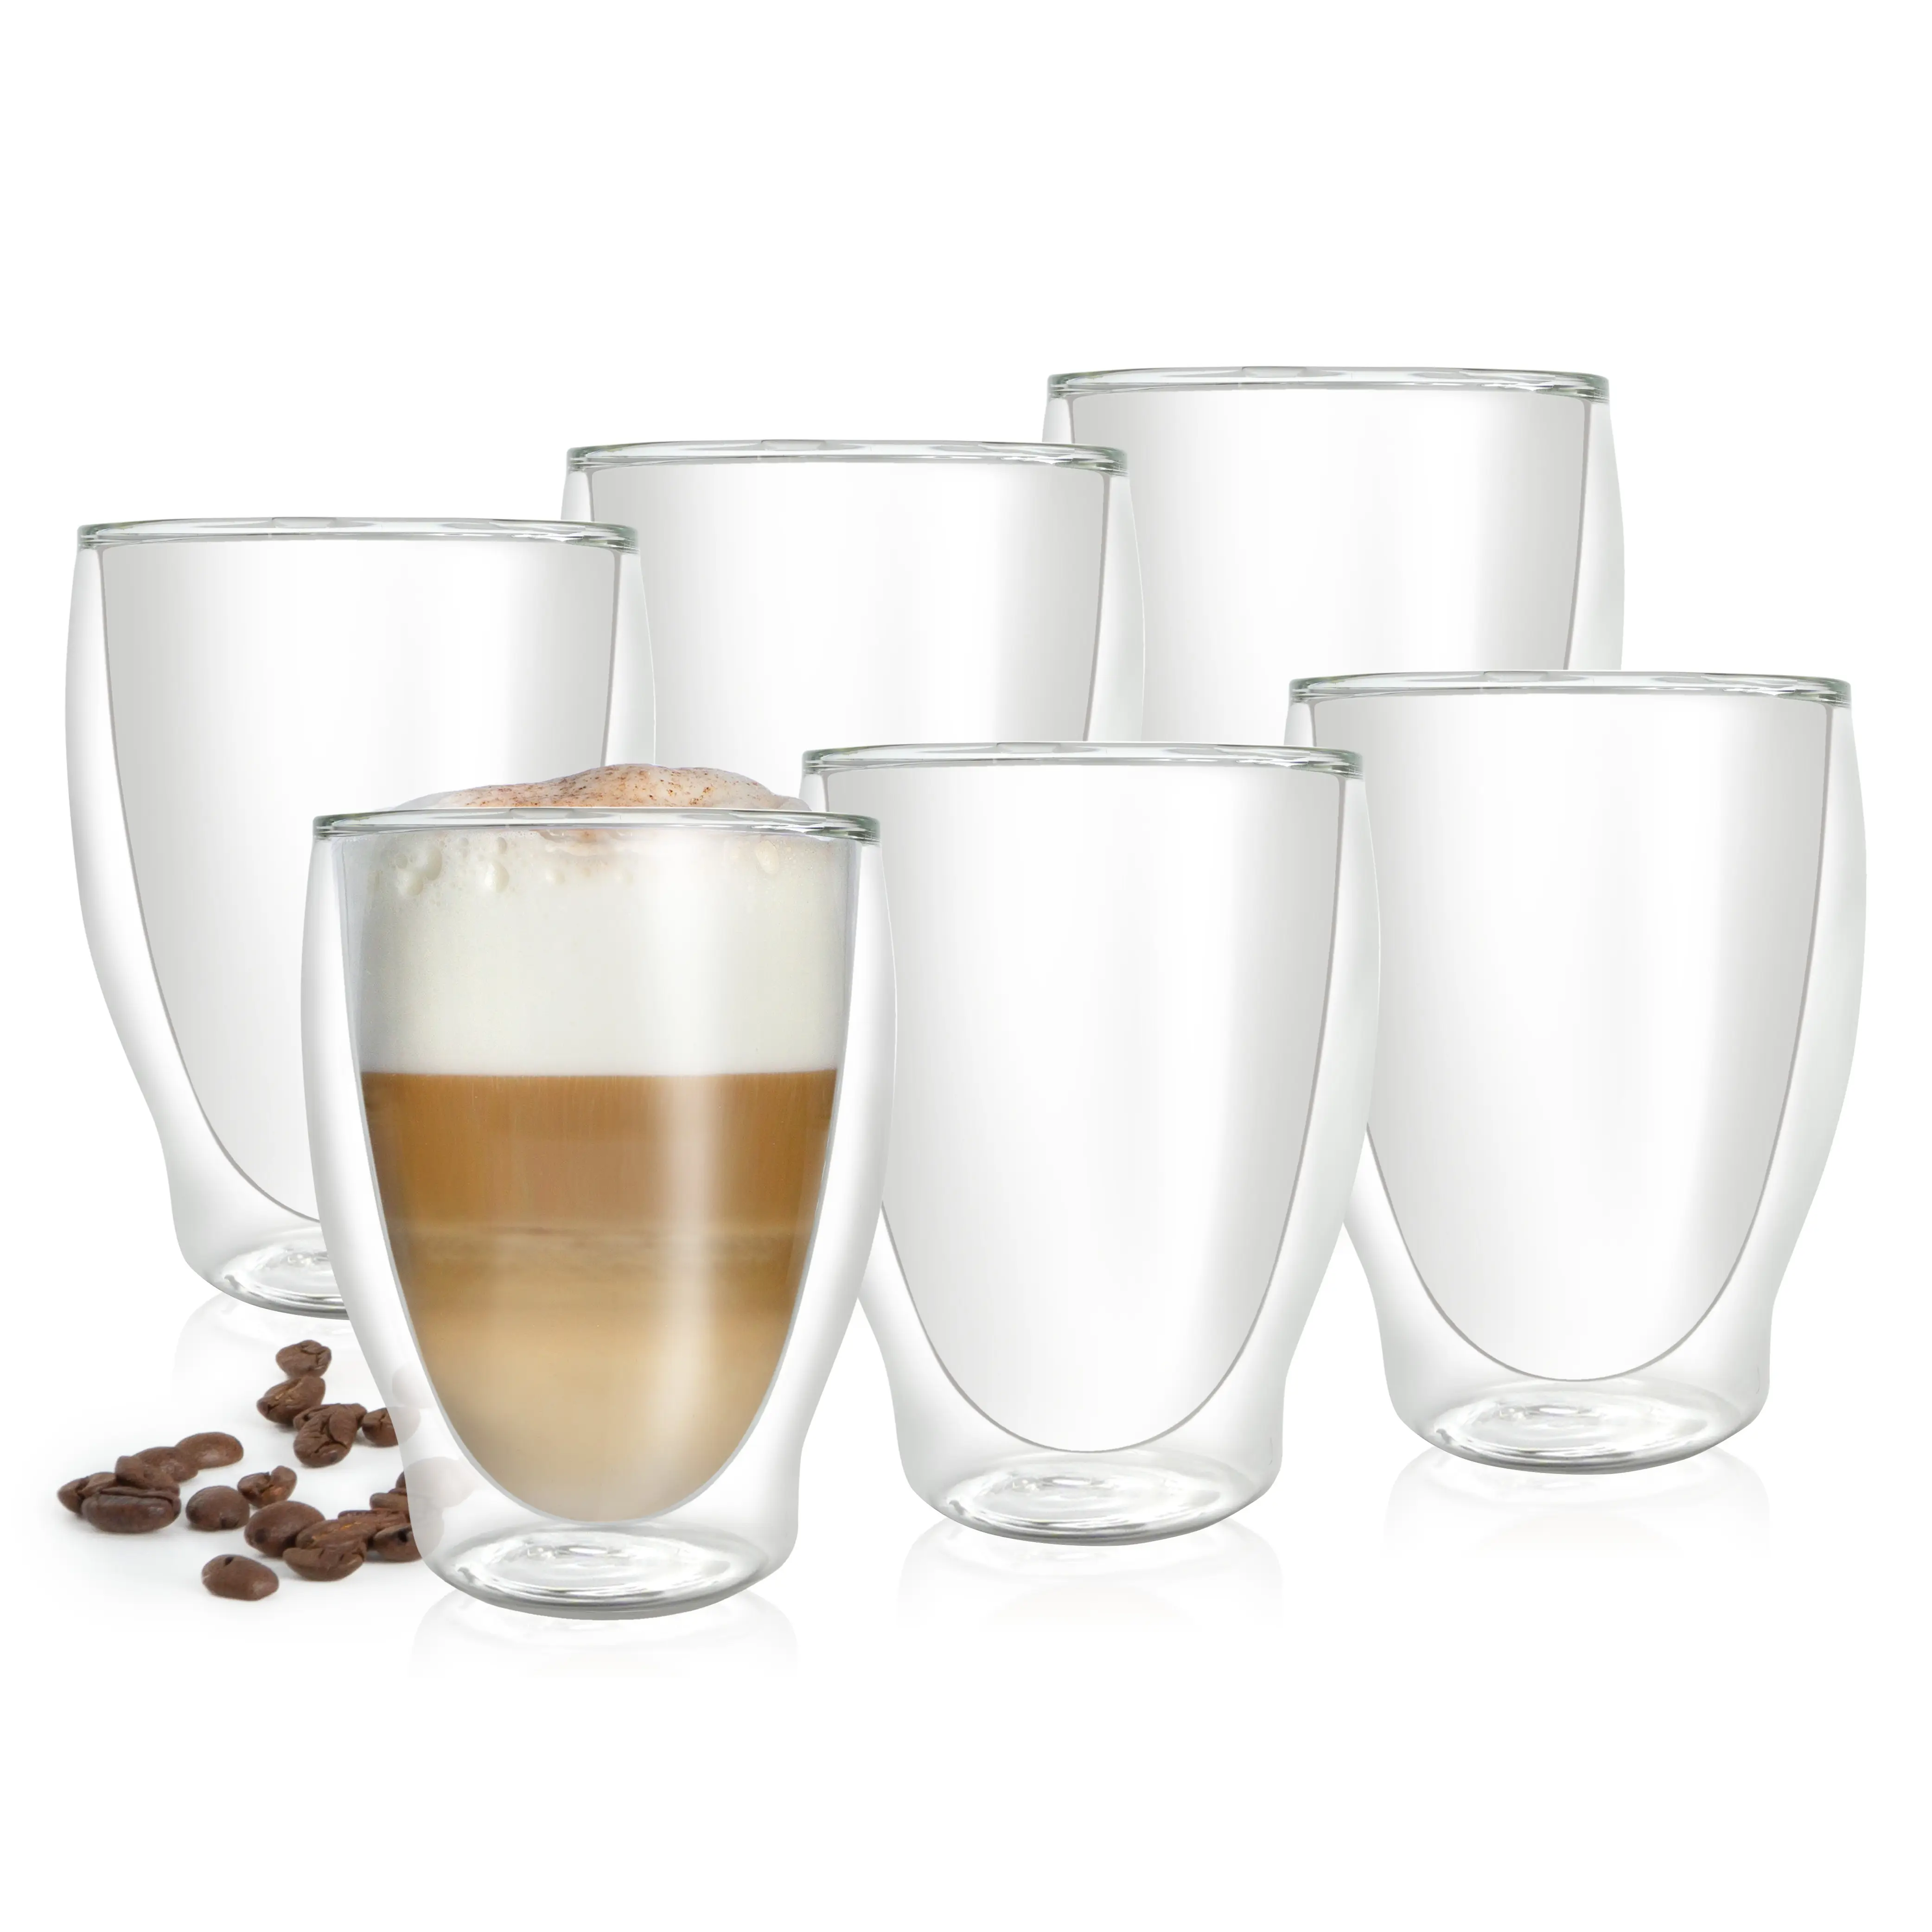 Kaffeegl盲ser Milano (6er-Set) | Gläser-Sets